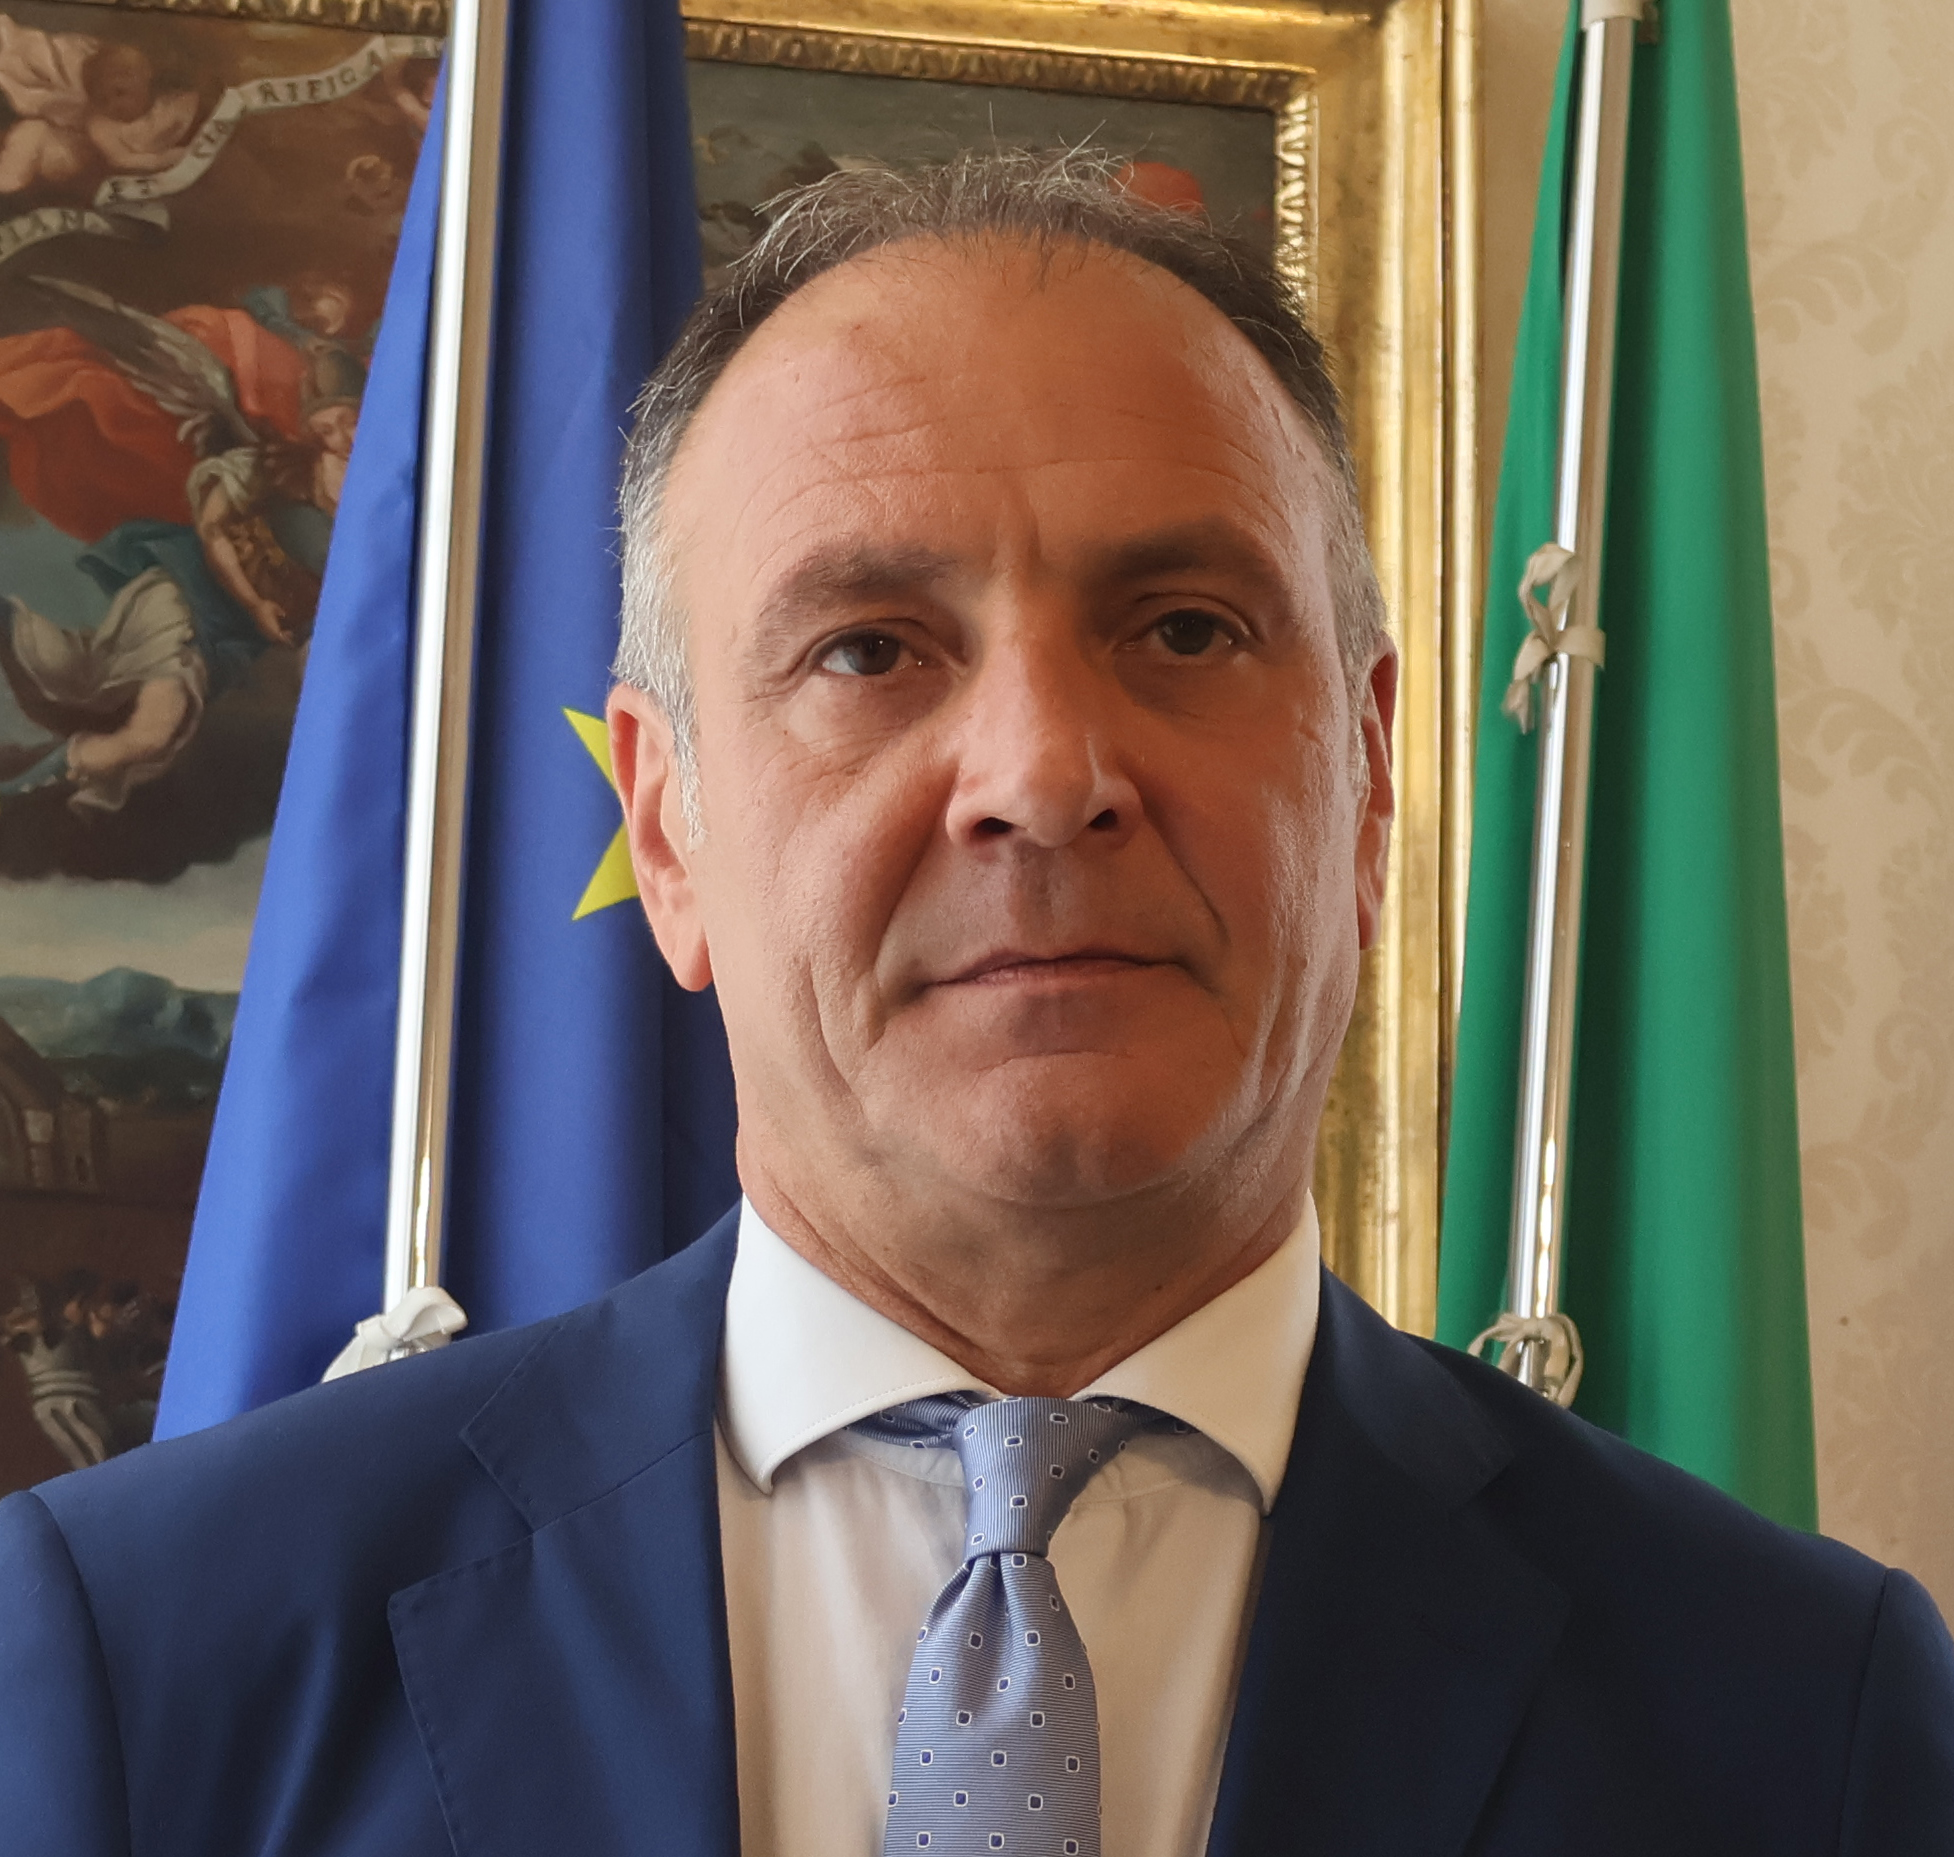 Beniamino Pier Paolo Olivo